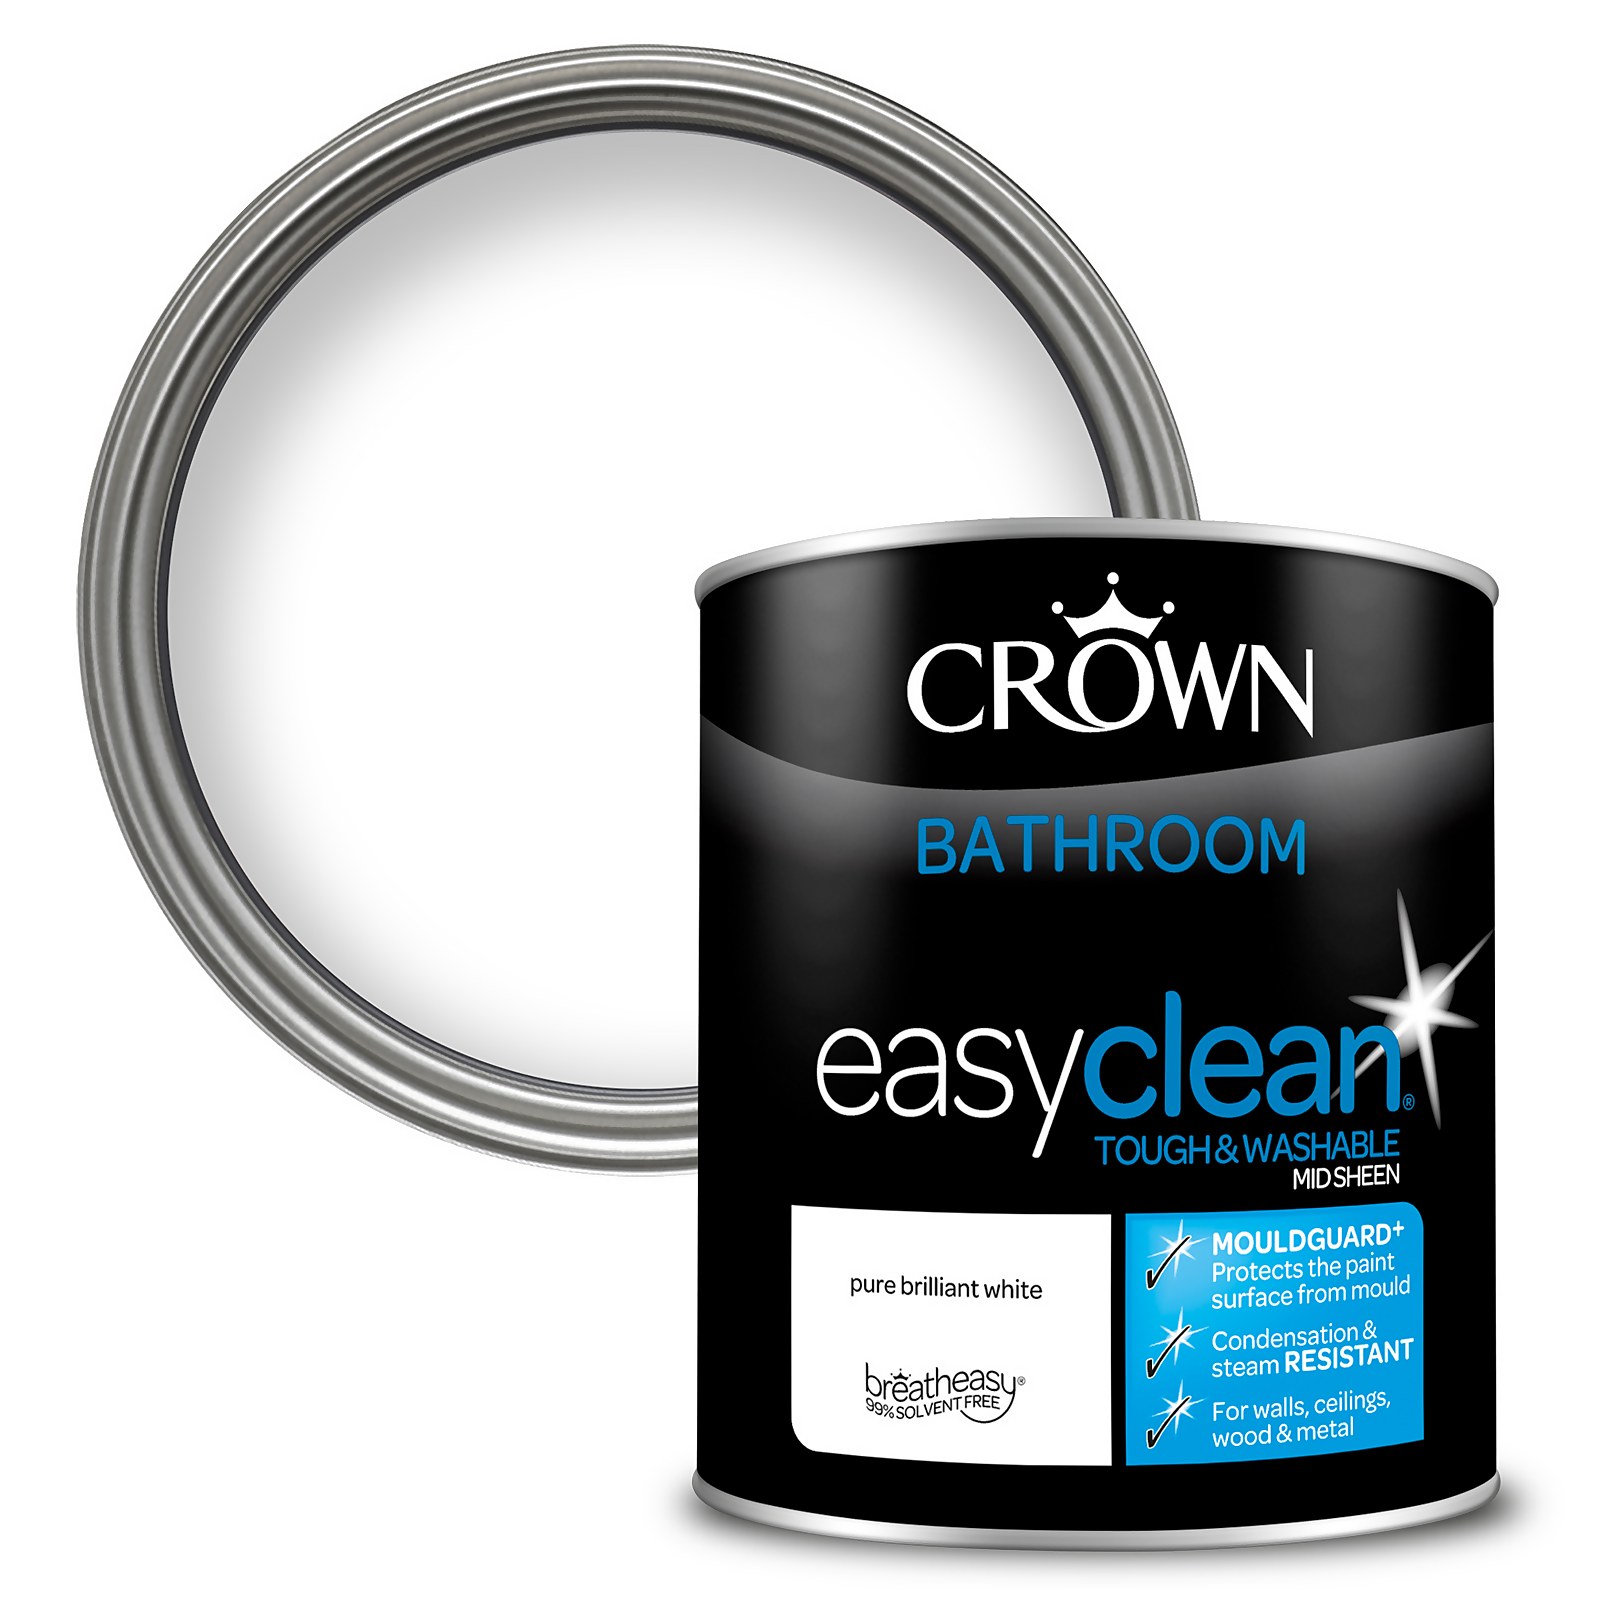 Crown Easyclean Bathroom Mouldguard+ Mid Sheen Paint Pure Brilliant White - 1L